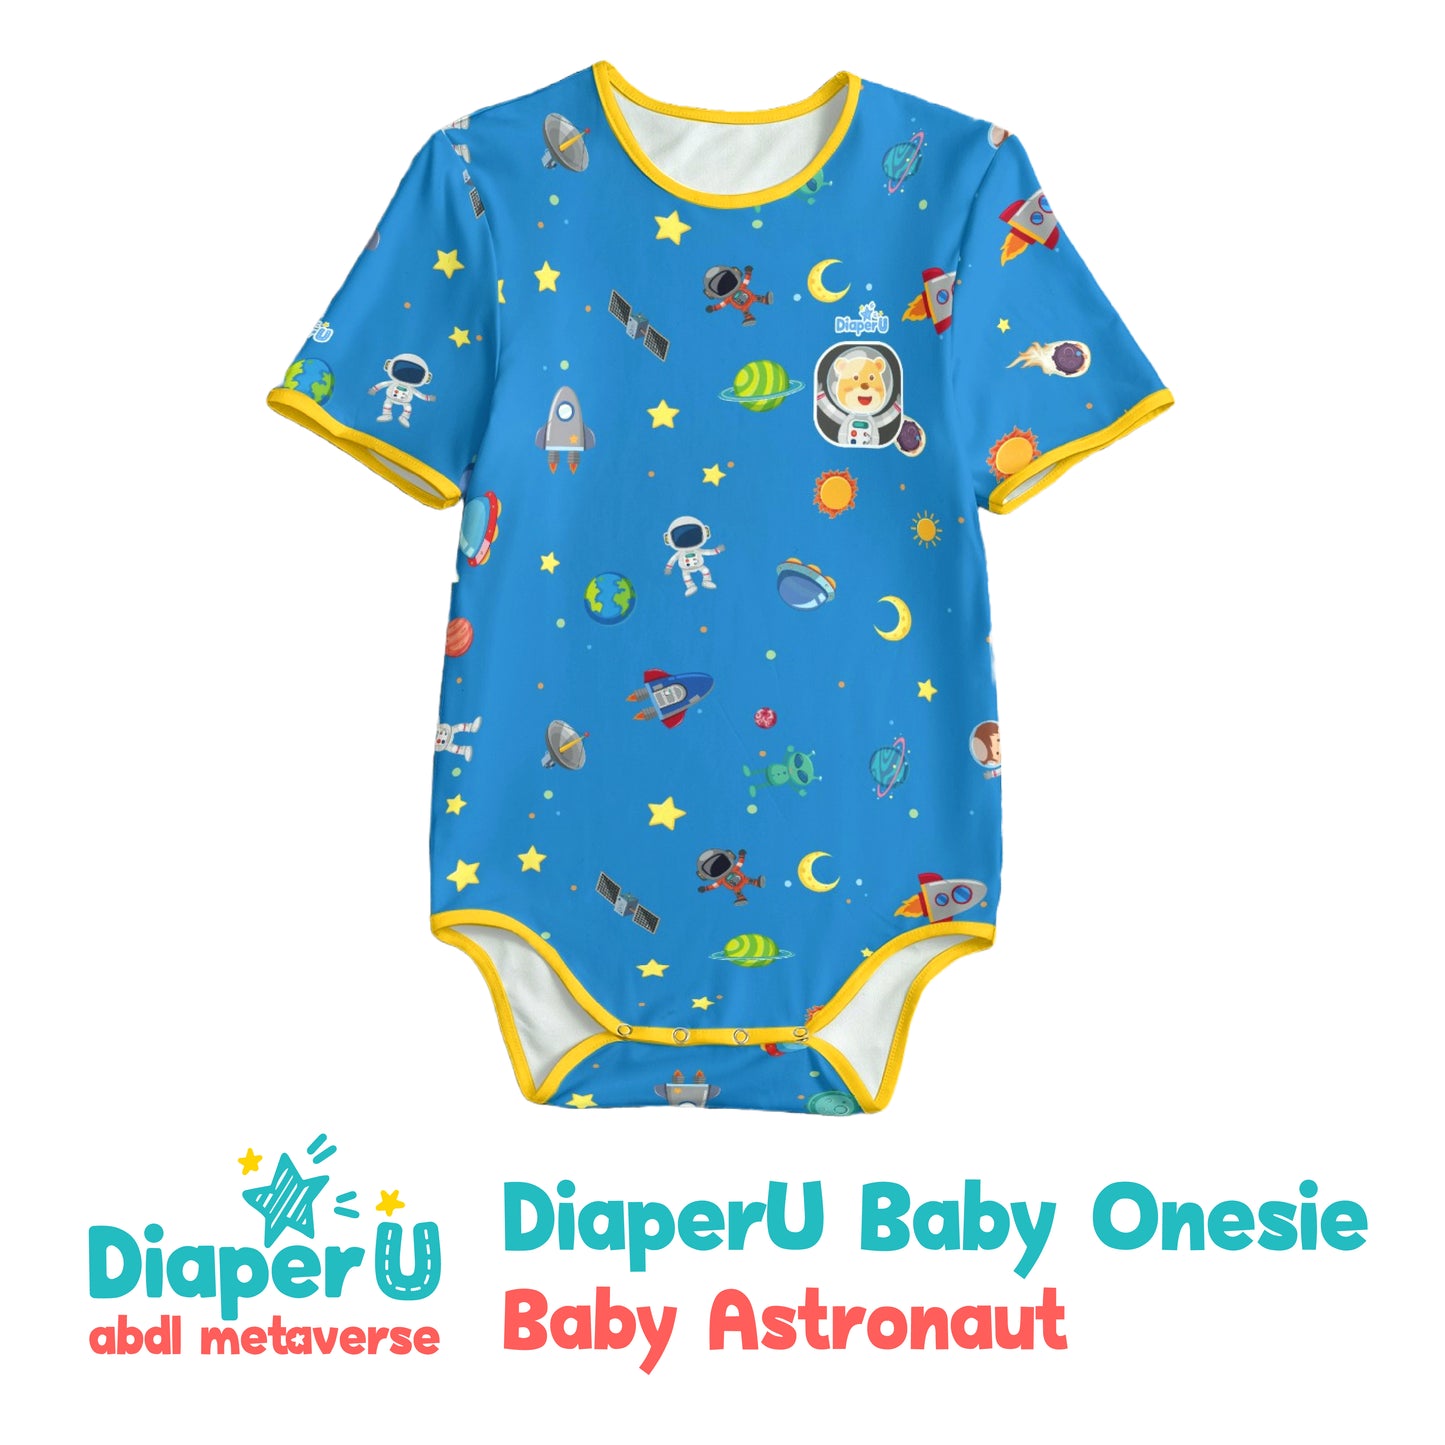 ABDL Onesie - Baby Astronaut